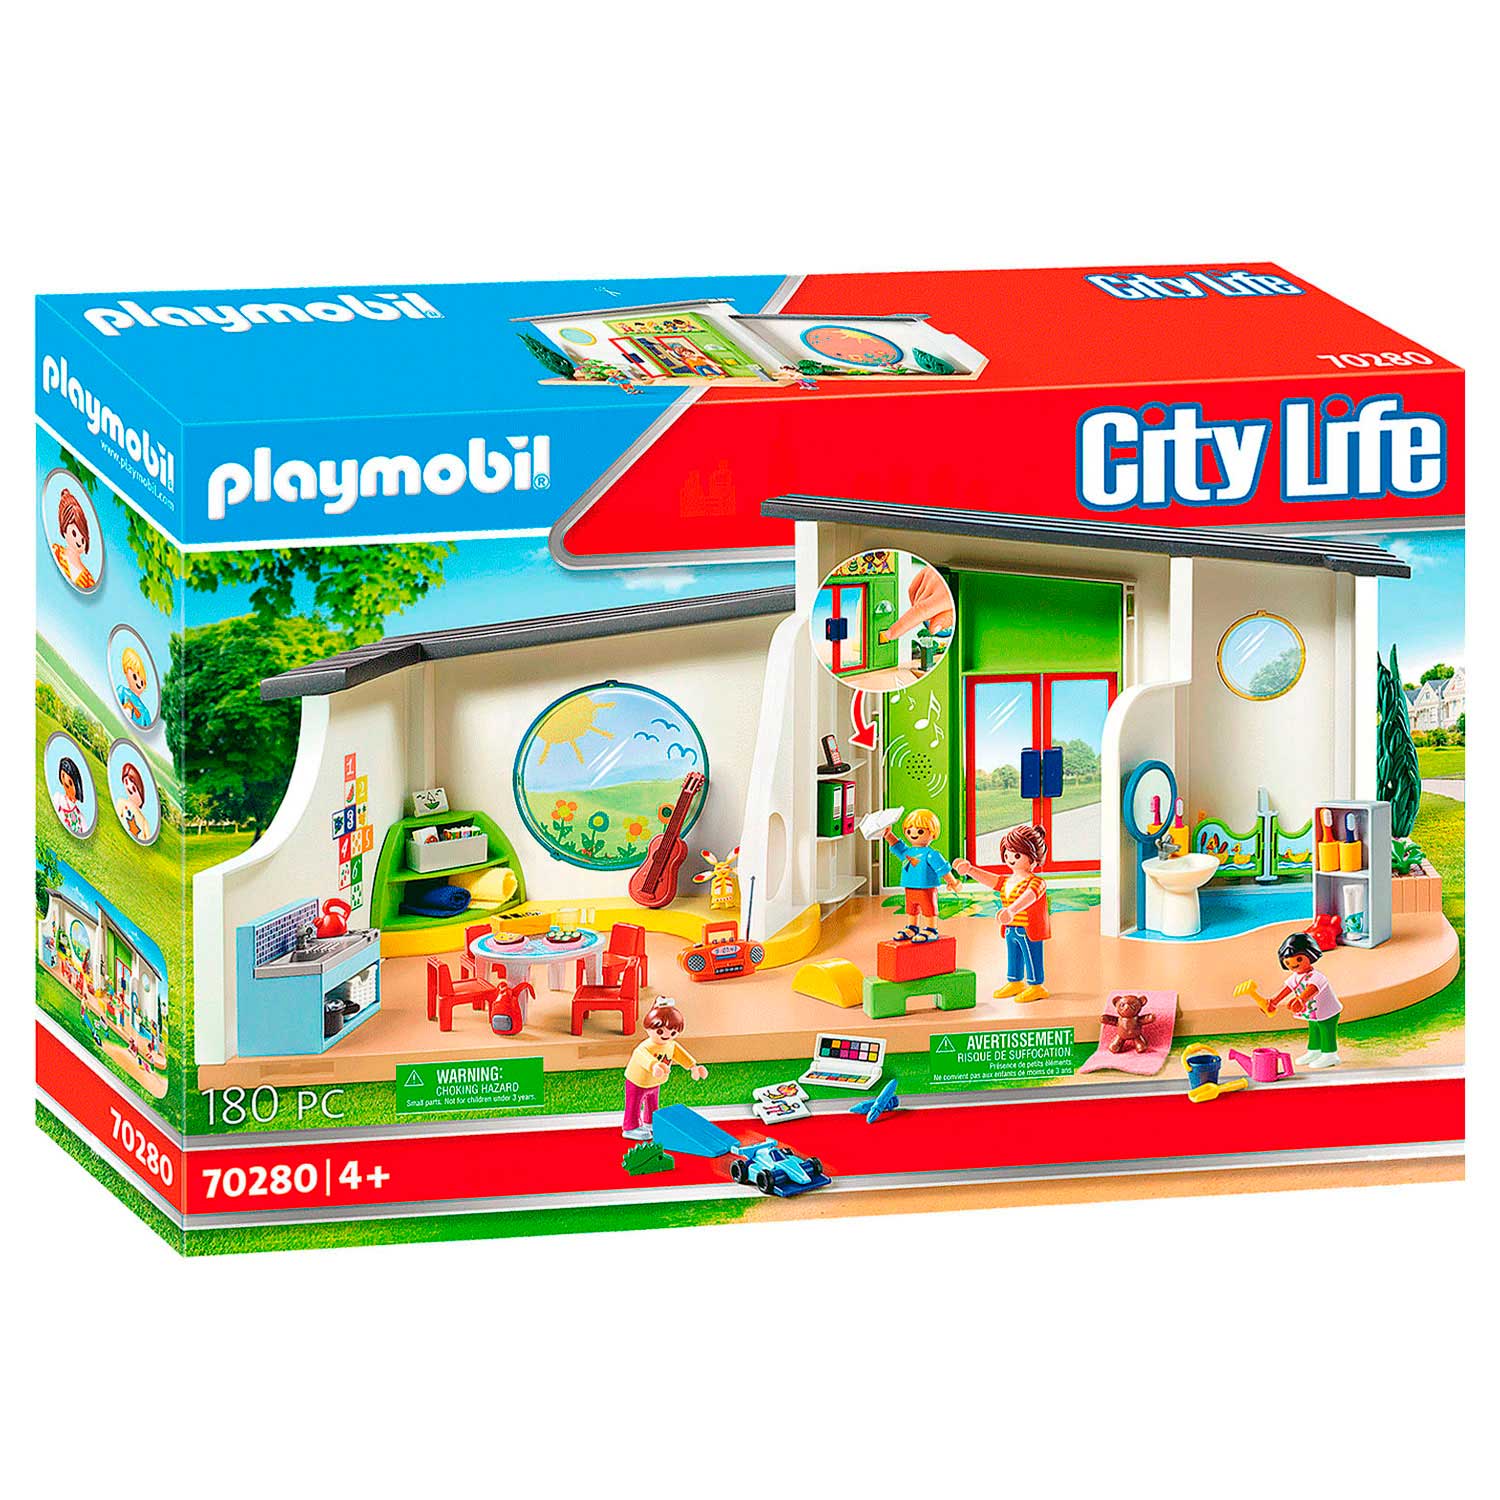 Playmobil City Life Garderie L'arc-en-ciel - 70280